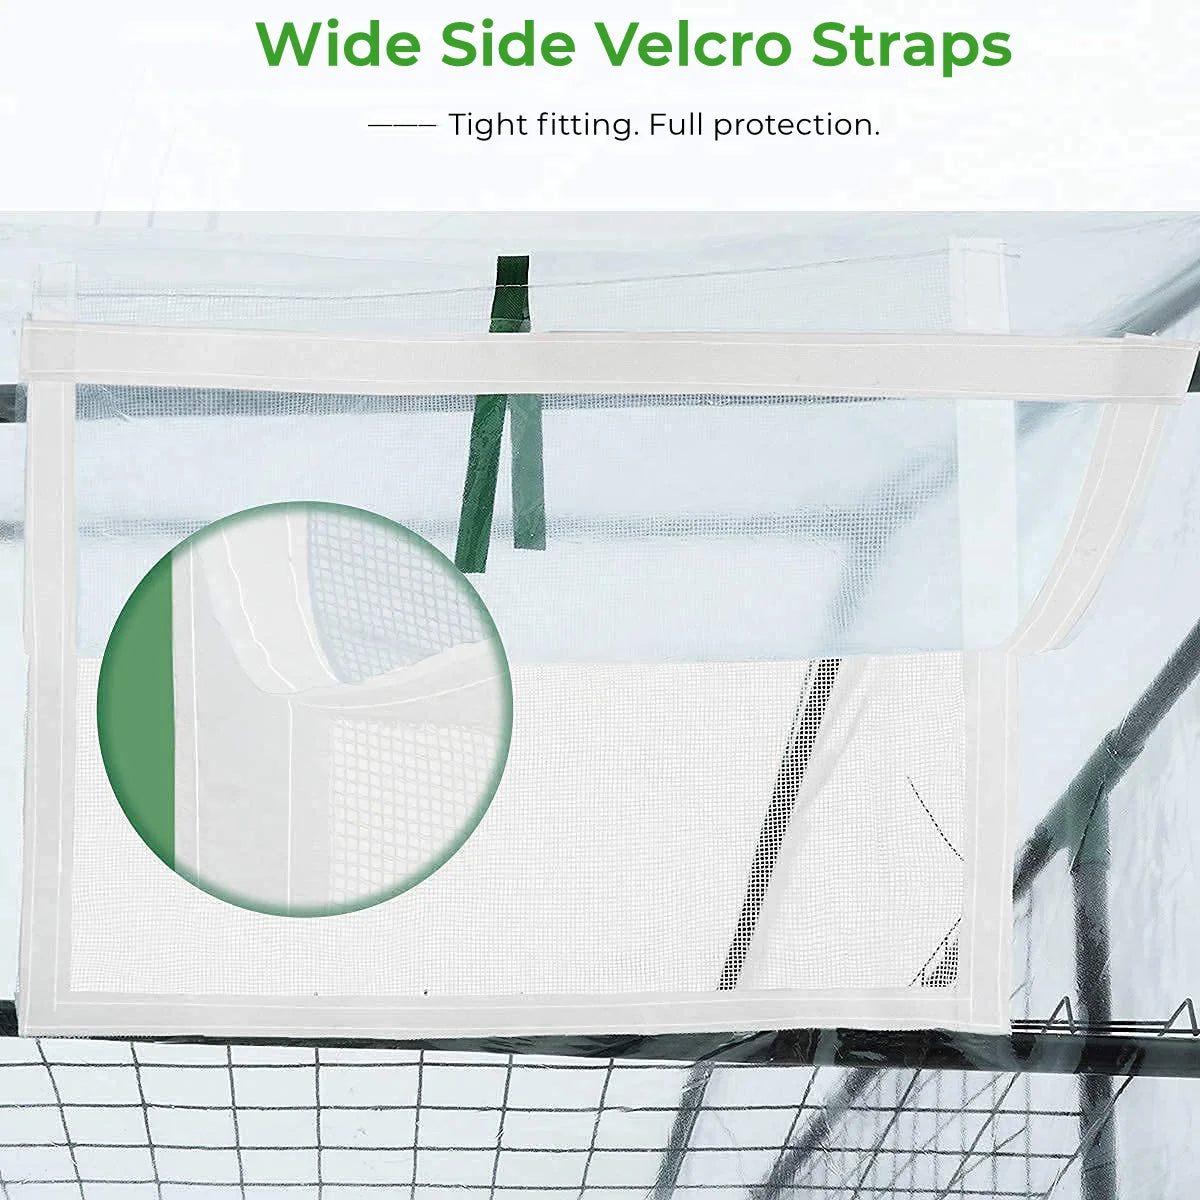 Wide Side Velcro Straps